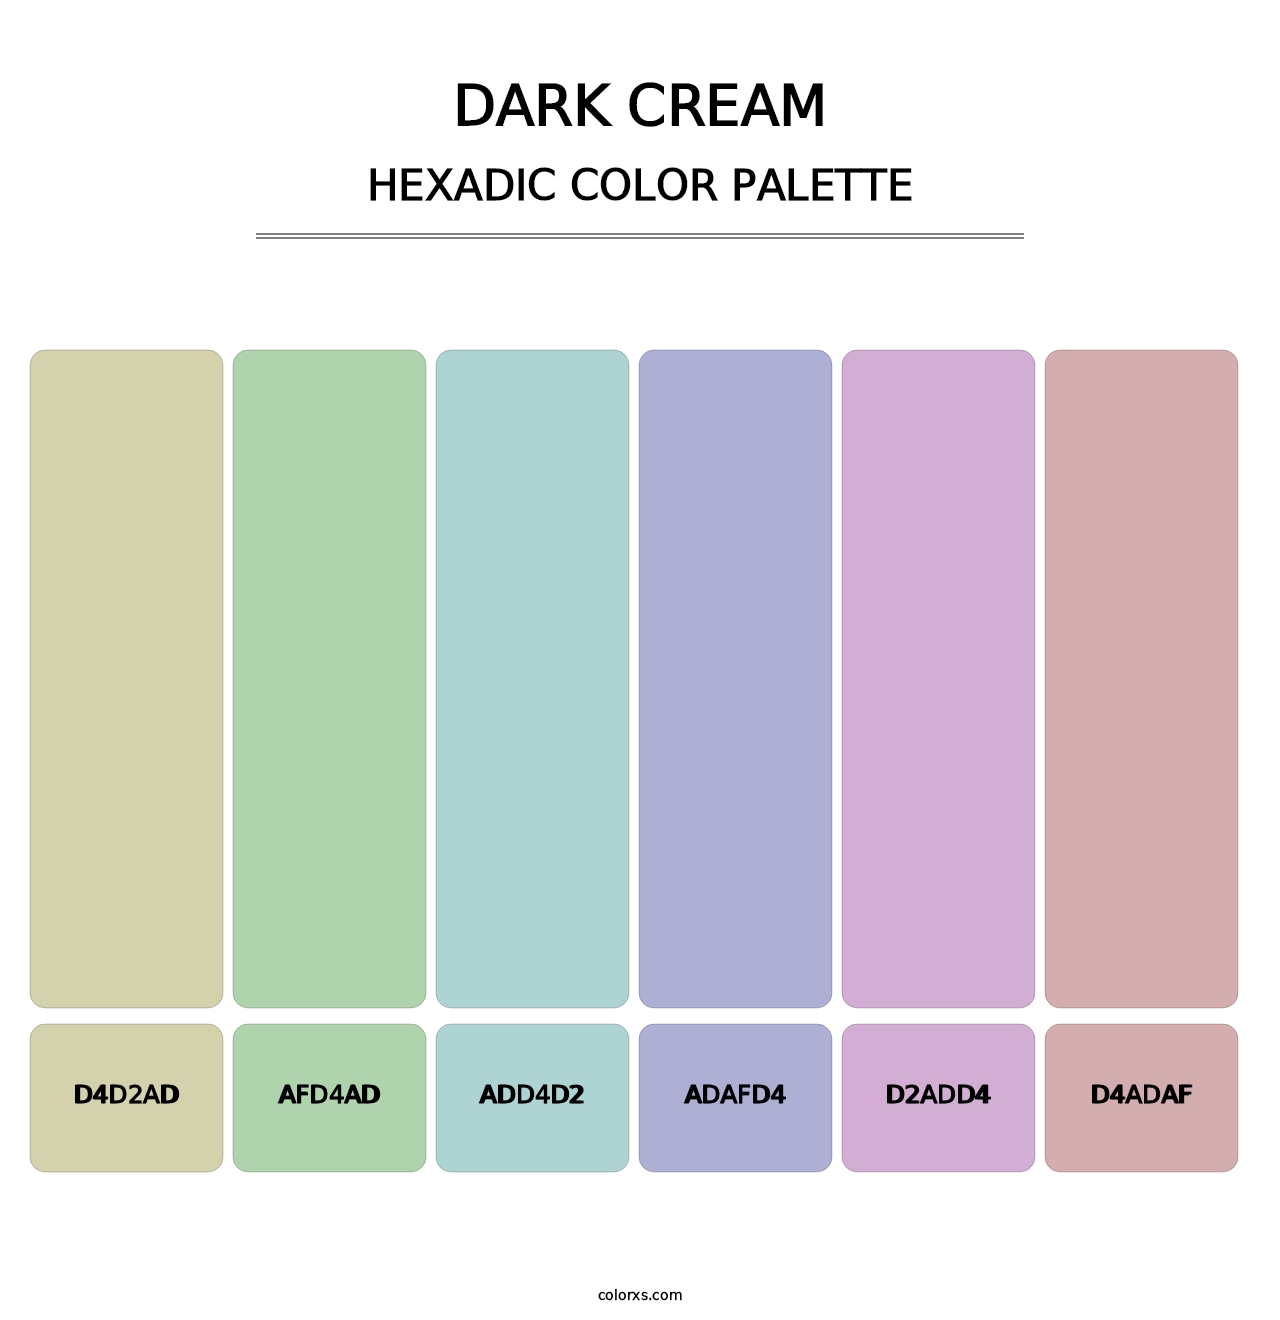 Dark Cream - Hexadic Color Palette